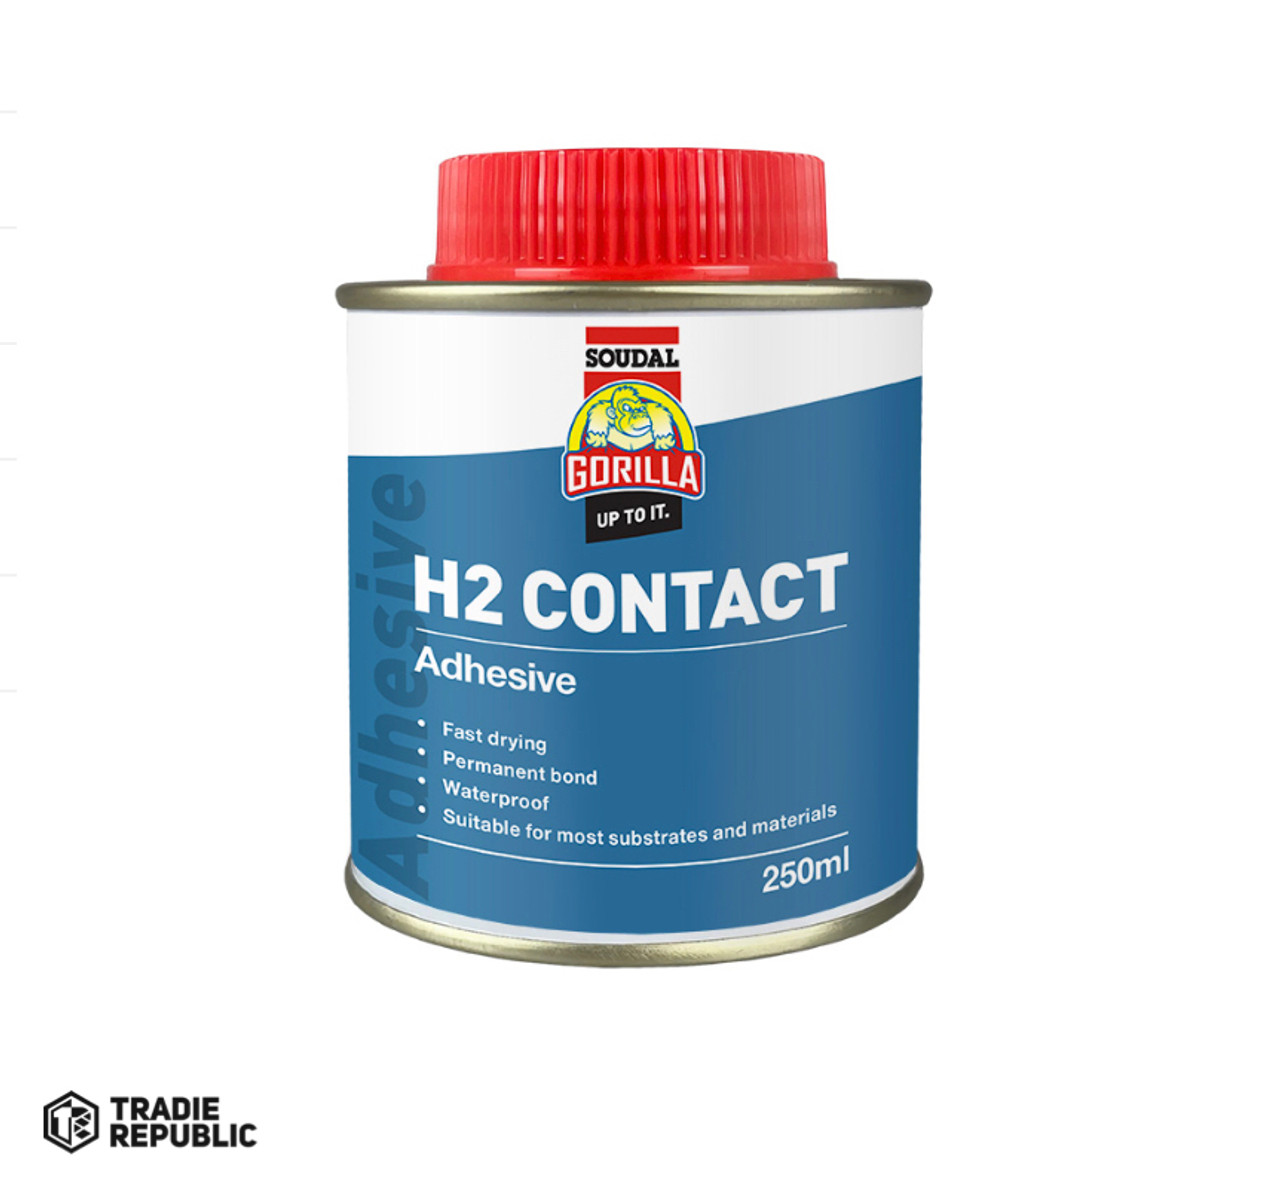 01319 Gorilla H2 Contact Adhesive